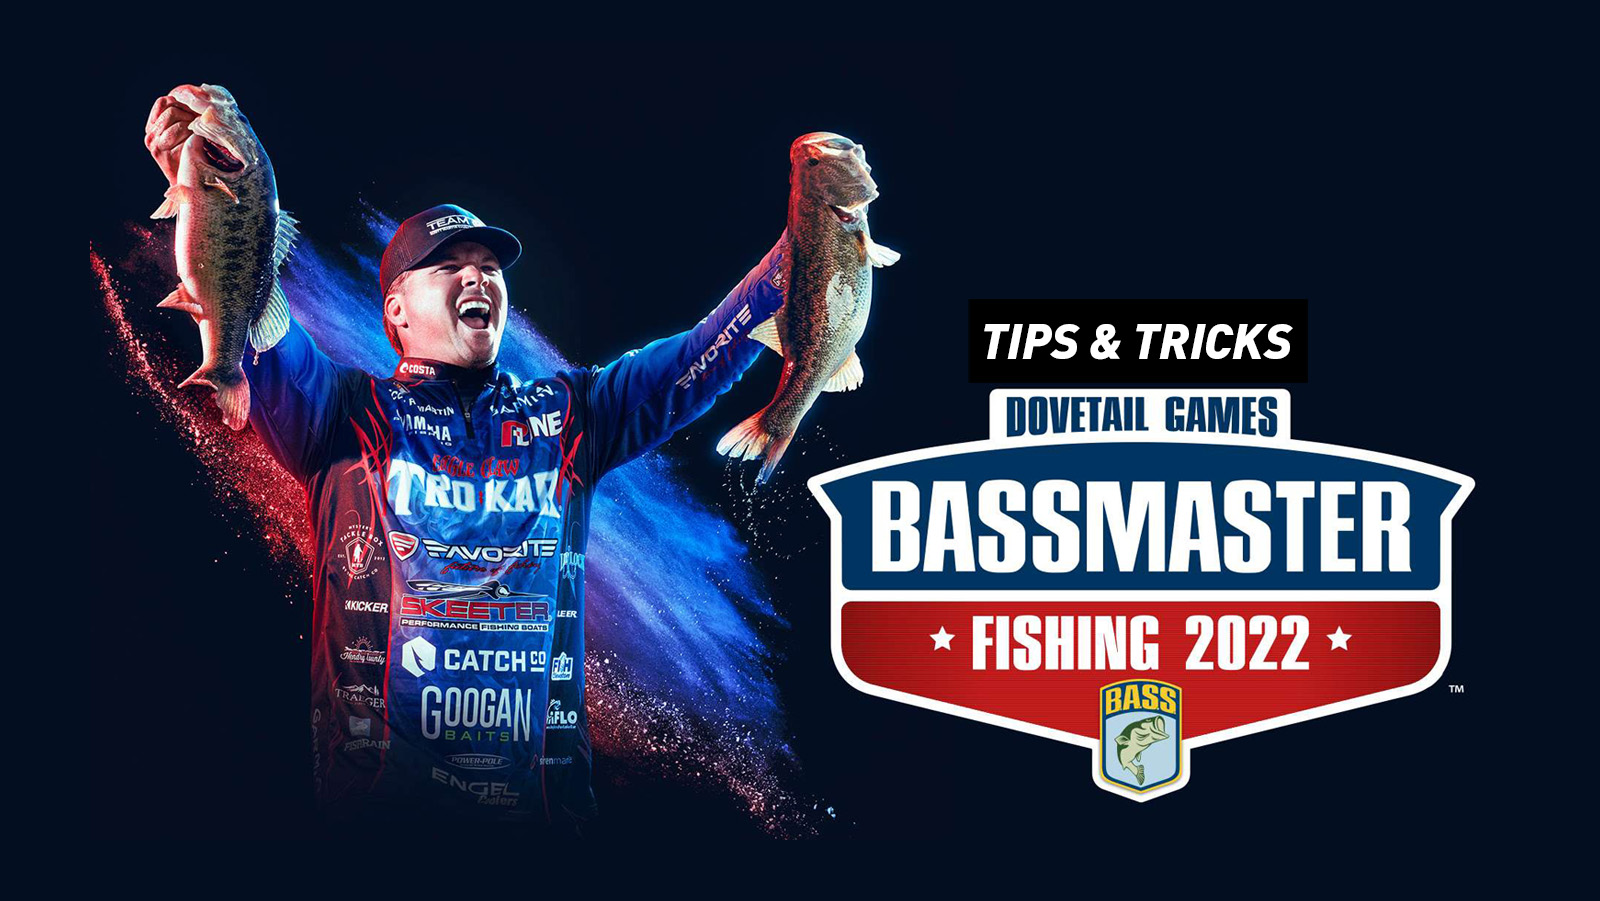 Bassmaster Fishing 2022 Tips and Tricks